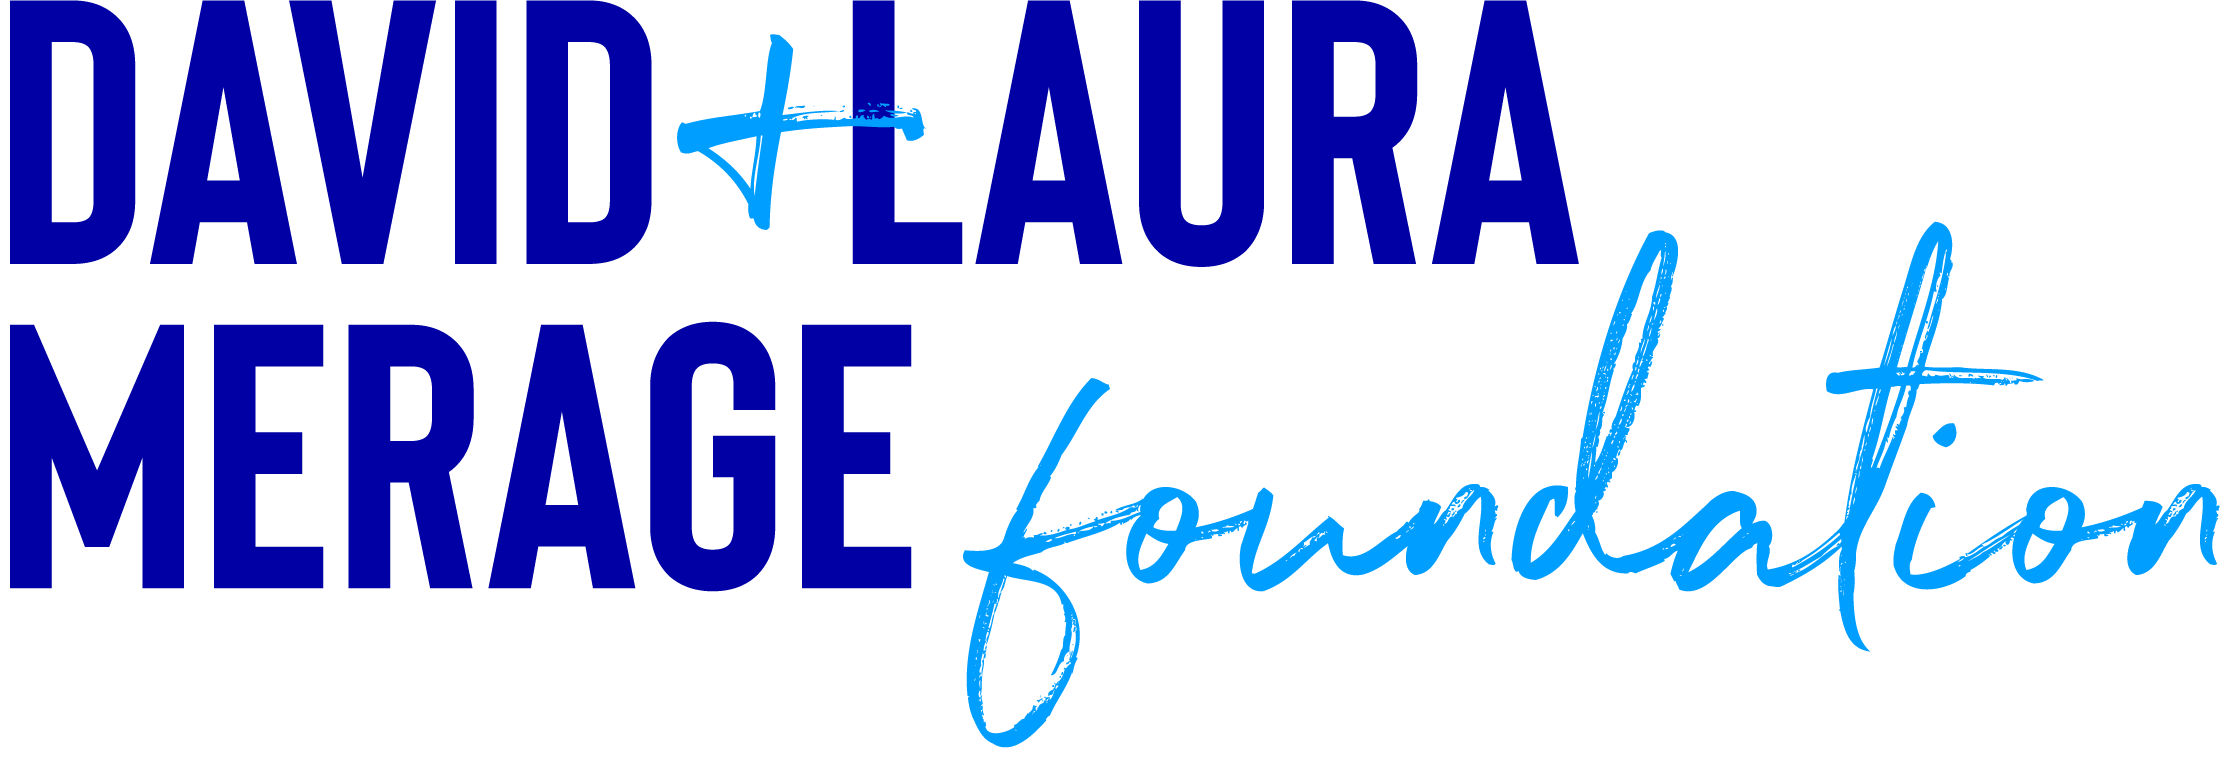 Merage Foundation Logo.png